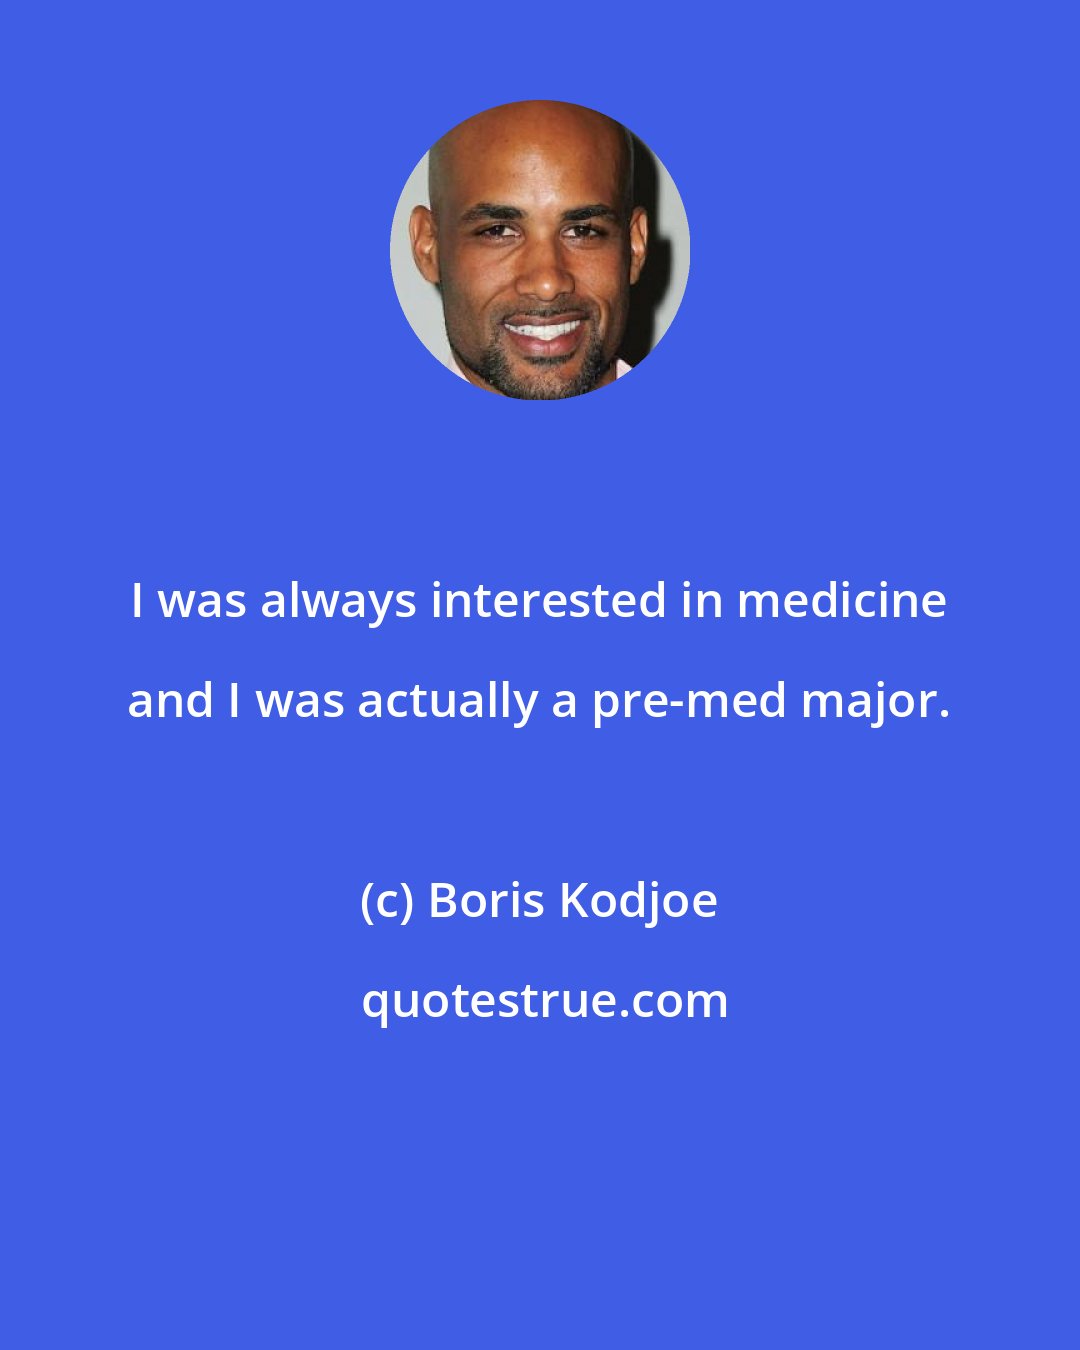 Boris Kodjoe: I was always interested in medicine and I was actually a pre-med major.